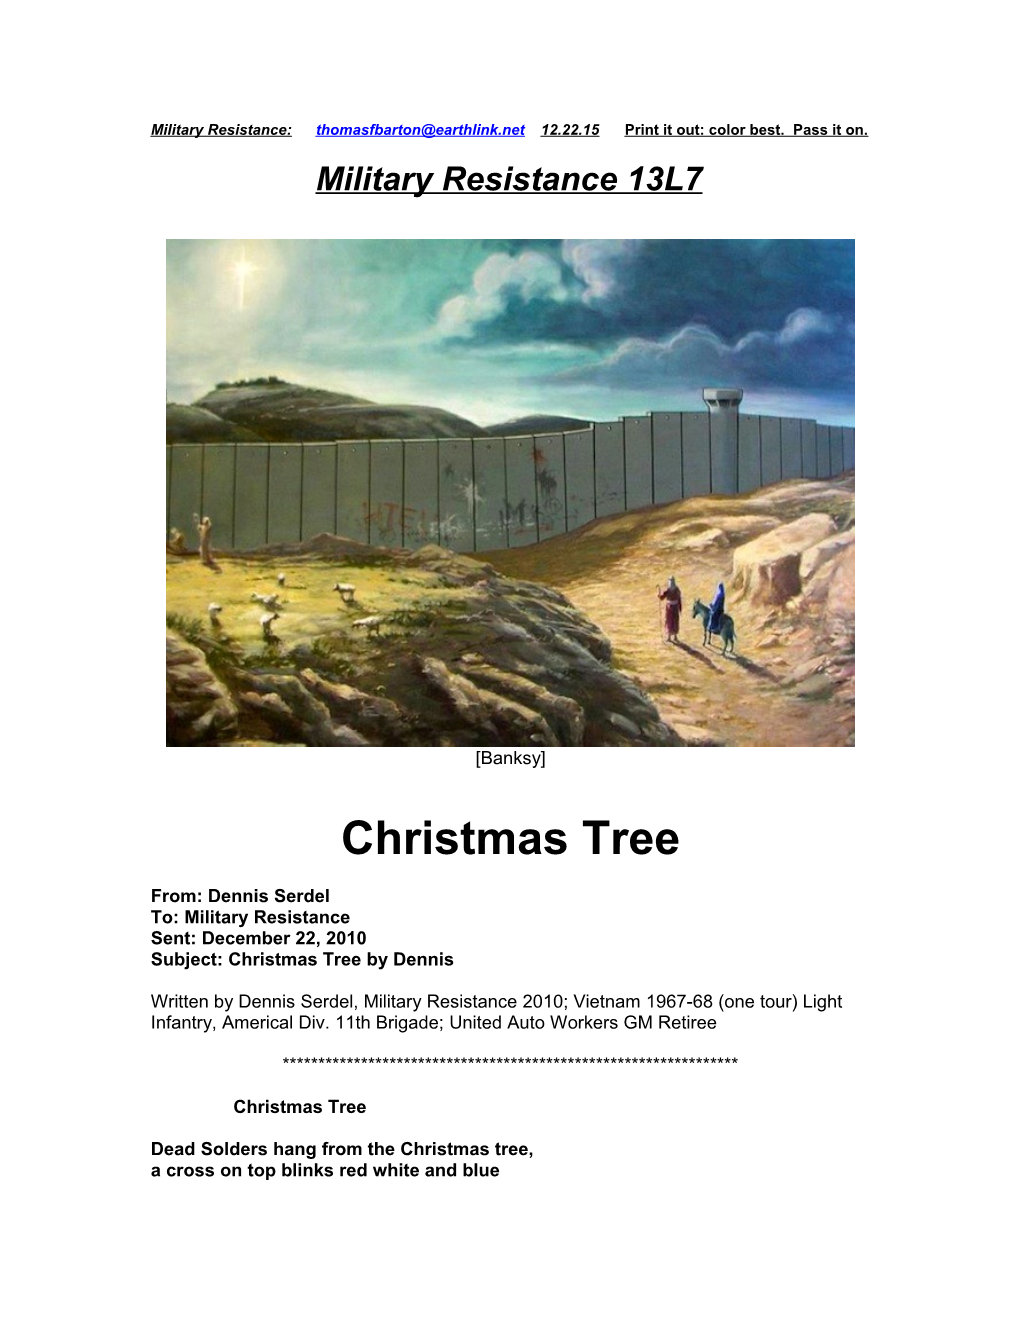 Military Resistance 13L7